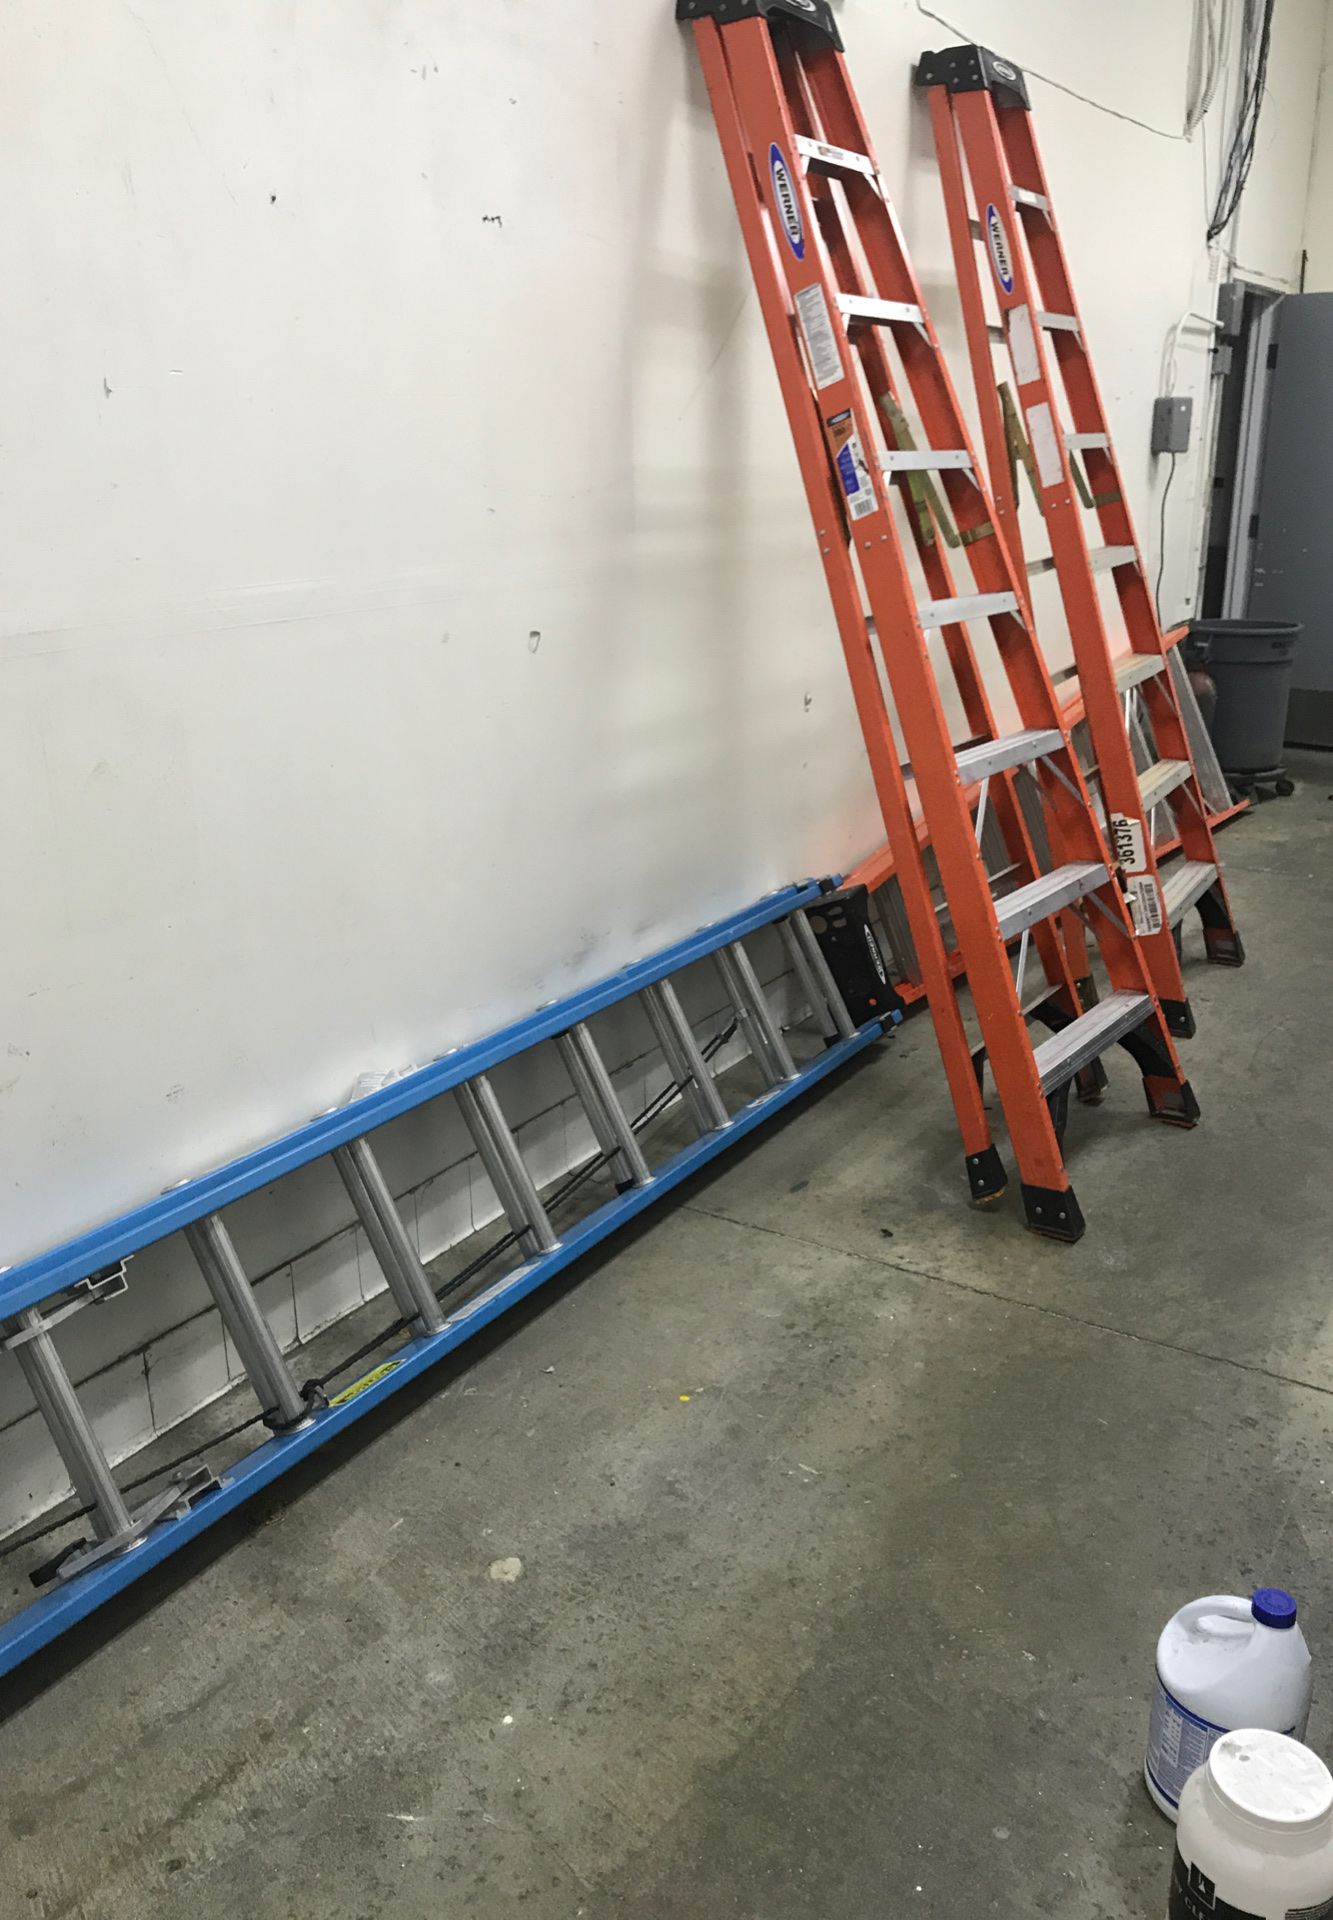 Werner fiberglass step ladders